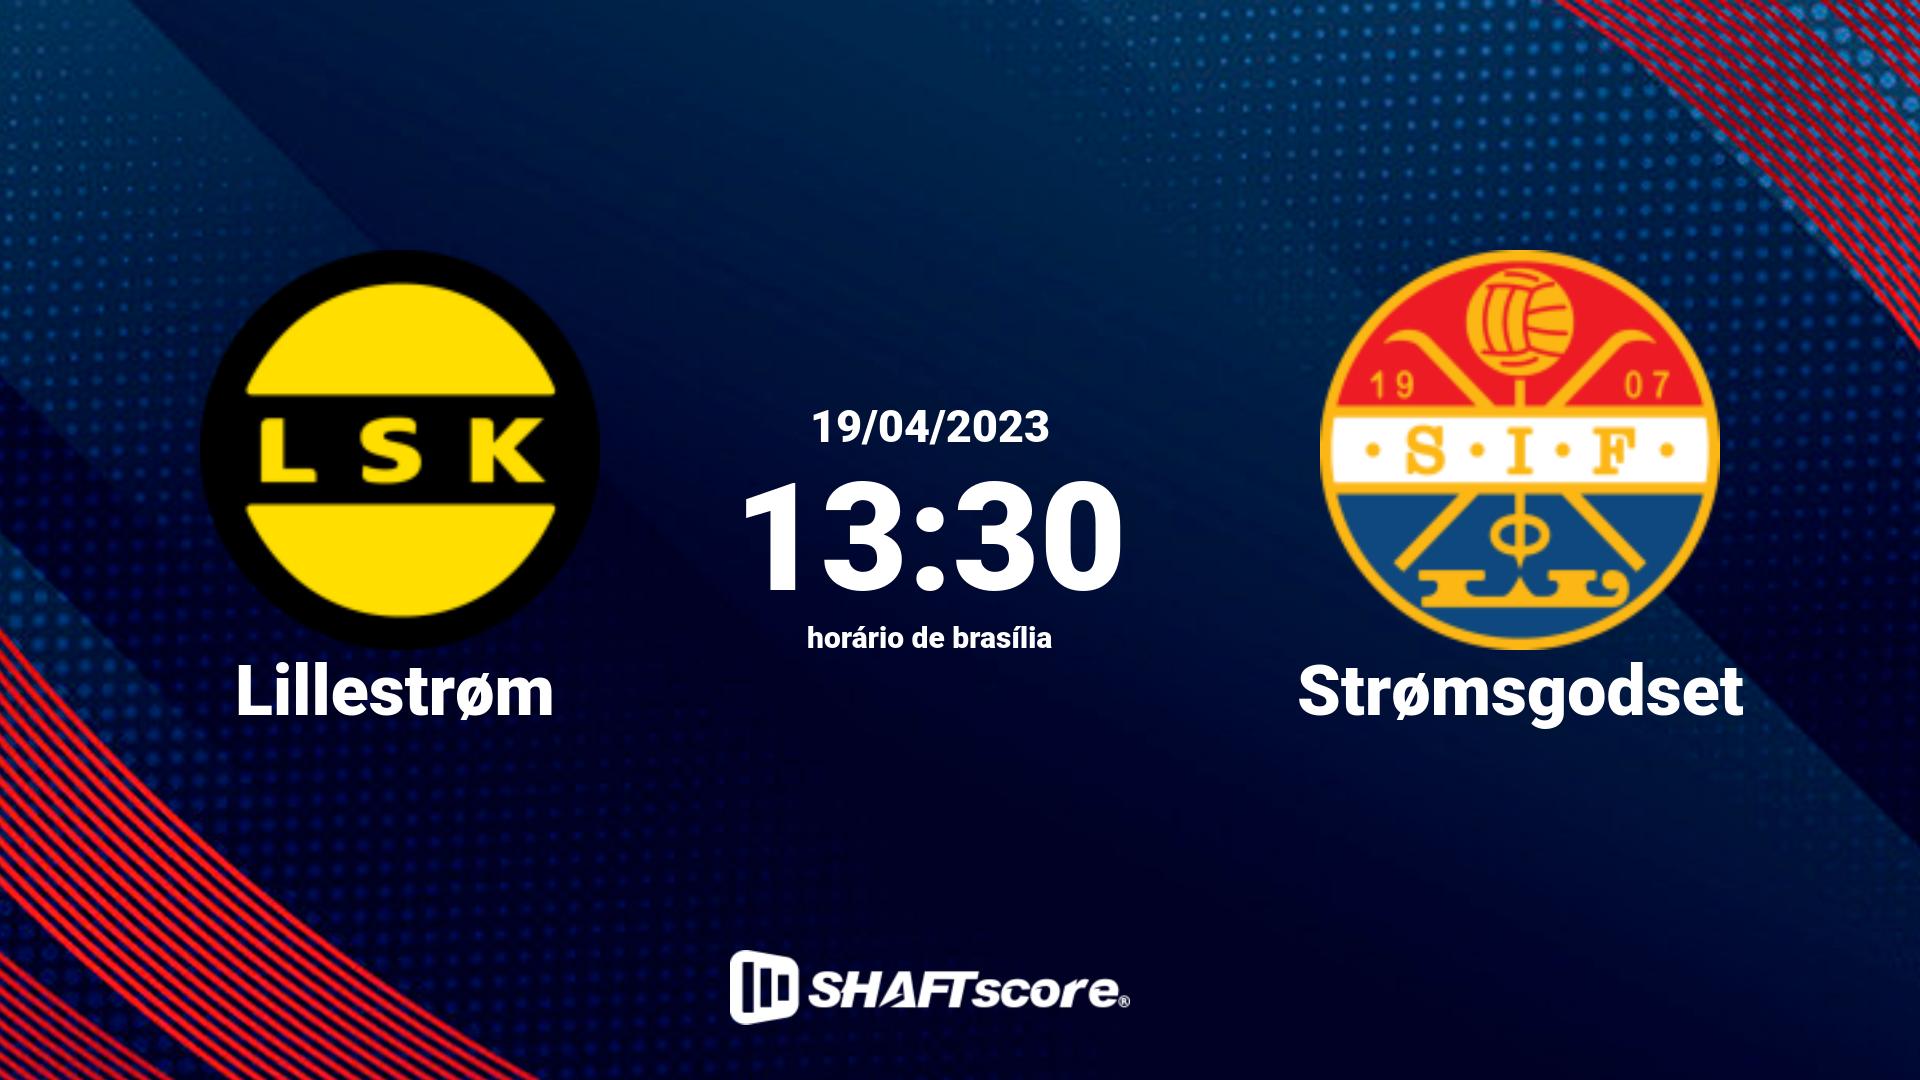 Estatísticas do jogo Lillestrøm vs Strømsgodset 19.04 13:30